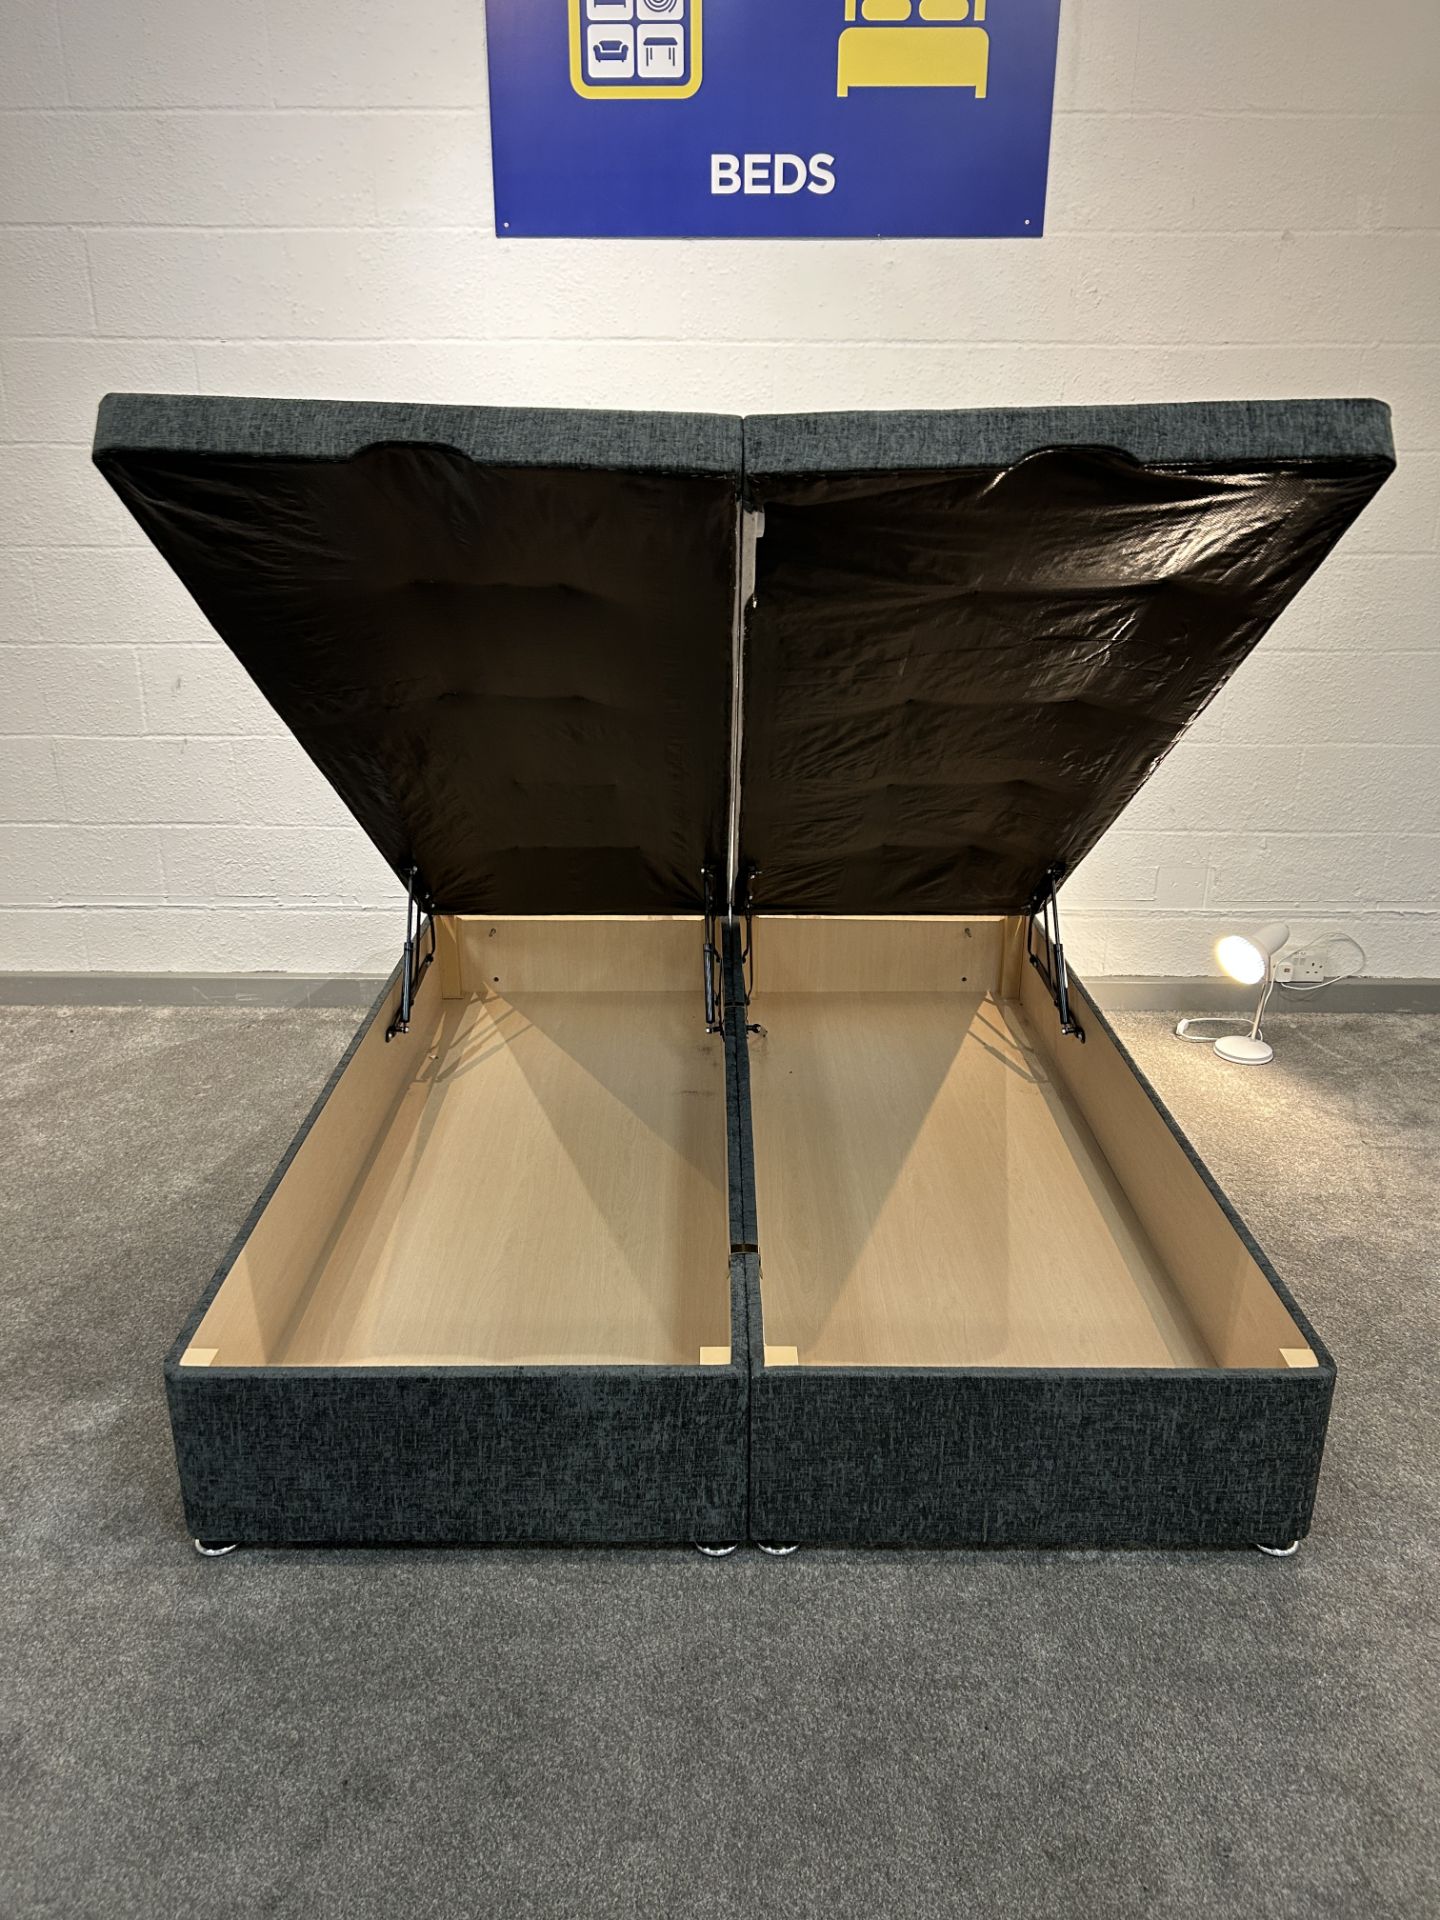 Ex-Display King Size Ottman Bed Set incl: Base & Headboard in Dark Grey - Image 4 of 4